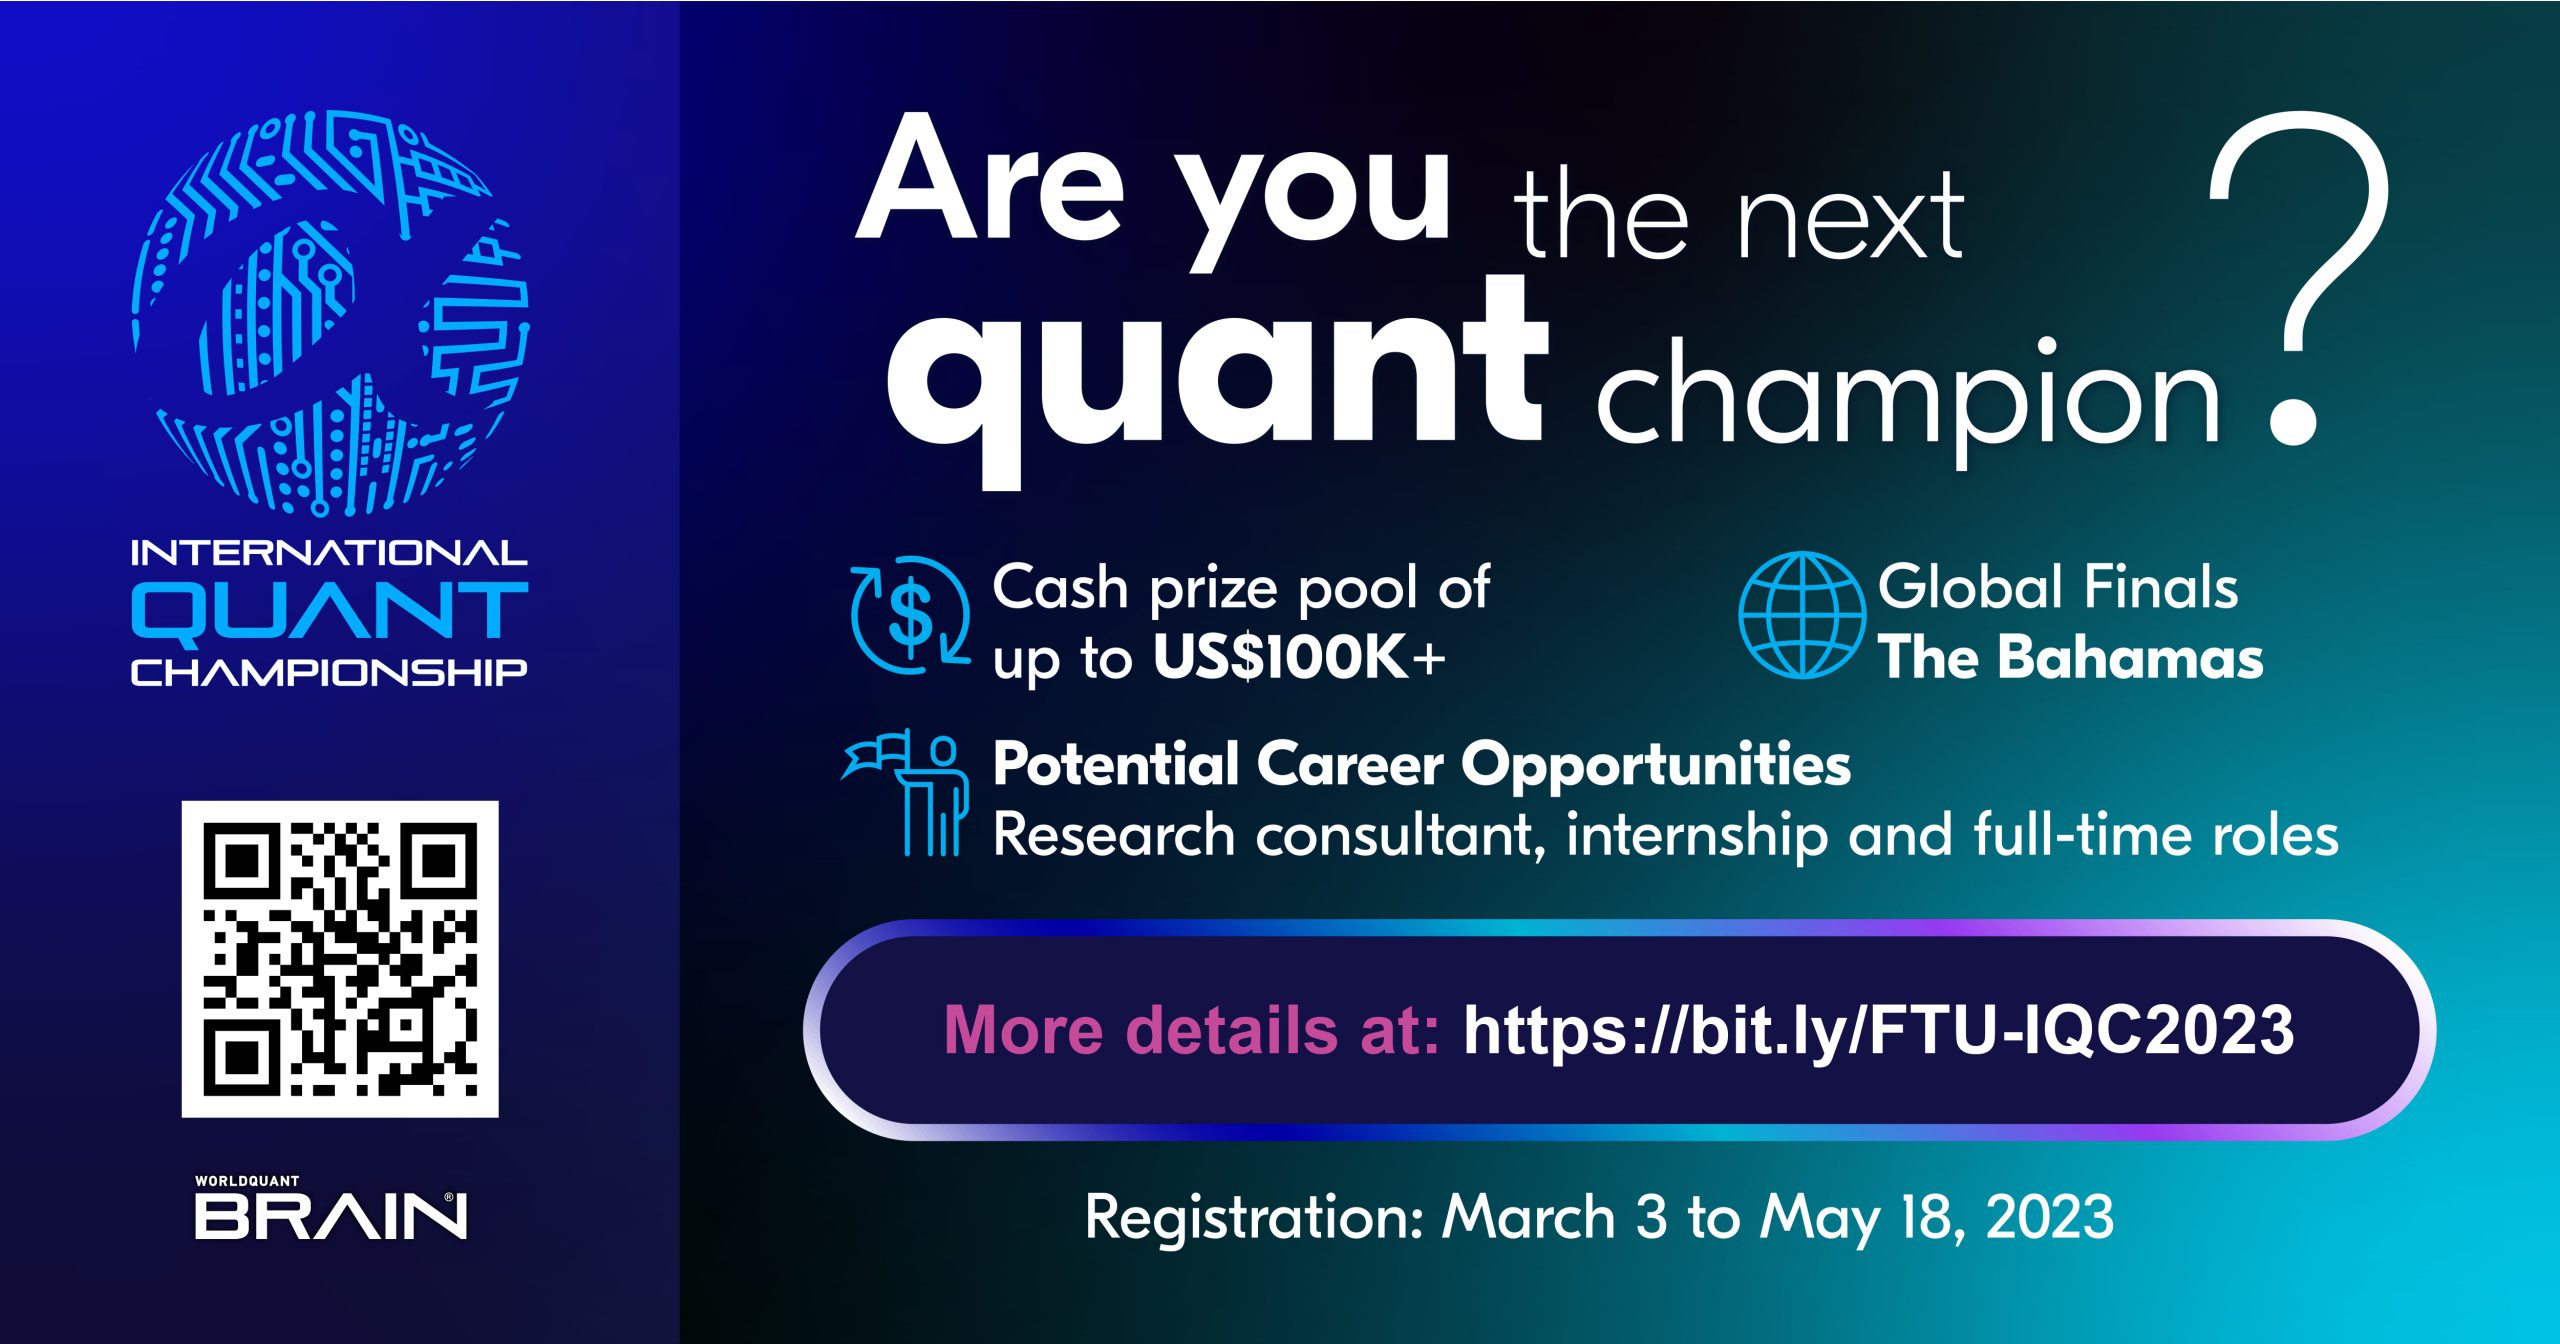 International Quant Championship 2023 – Are you the next quant champion?